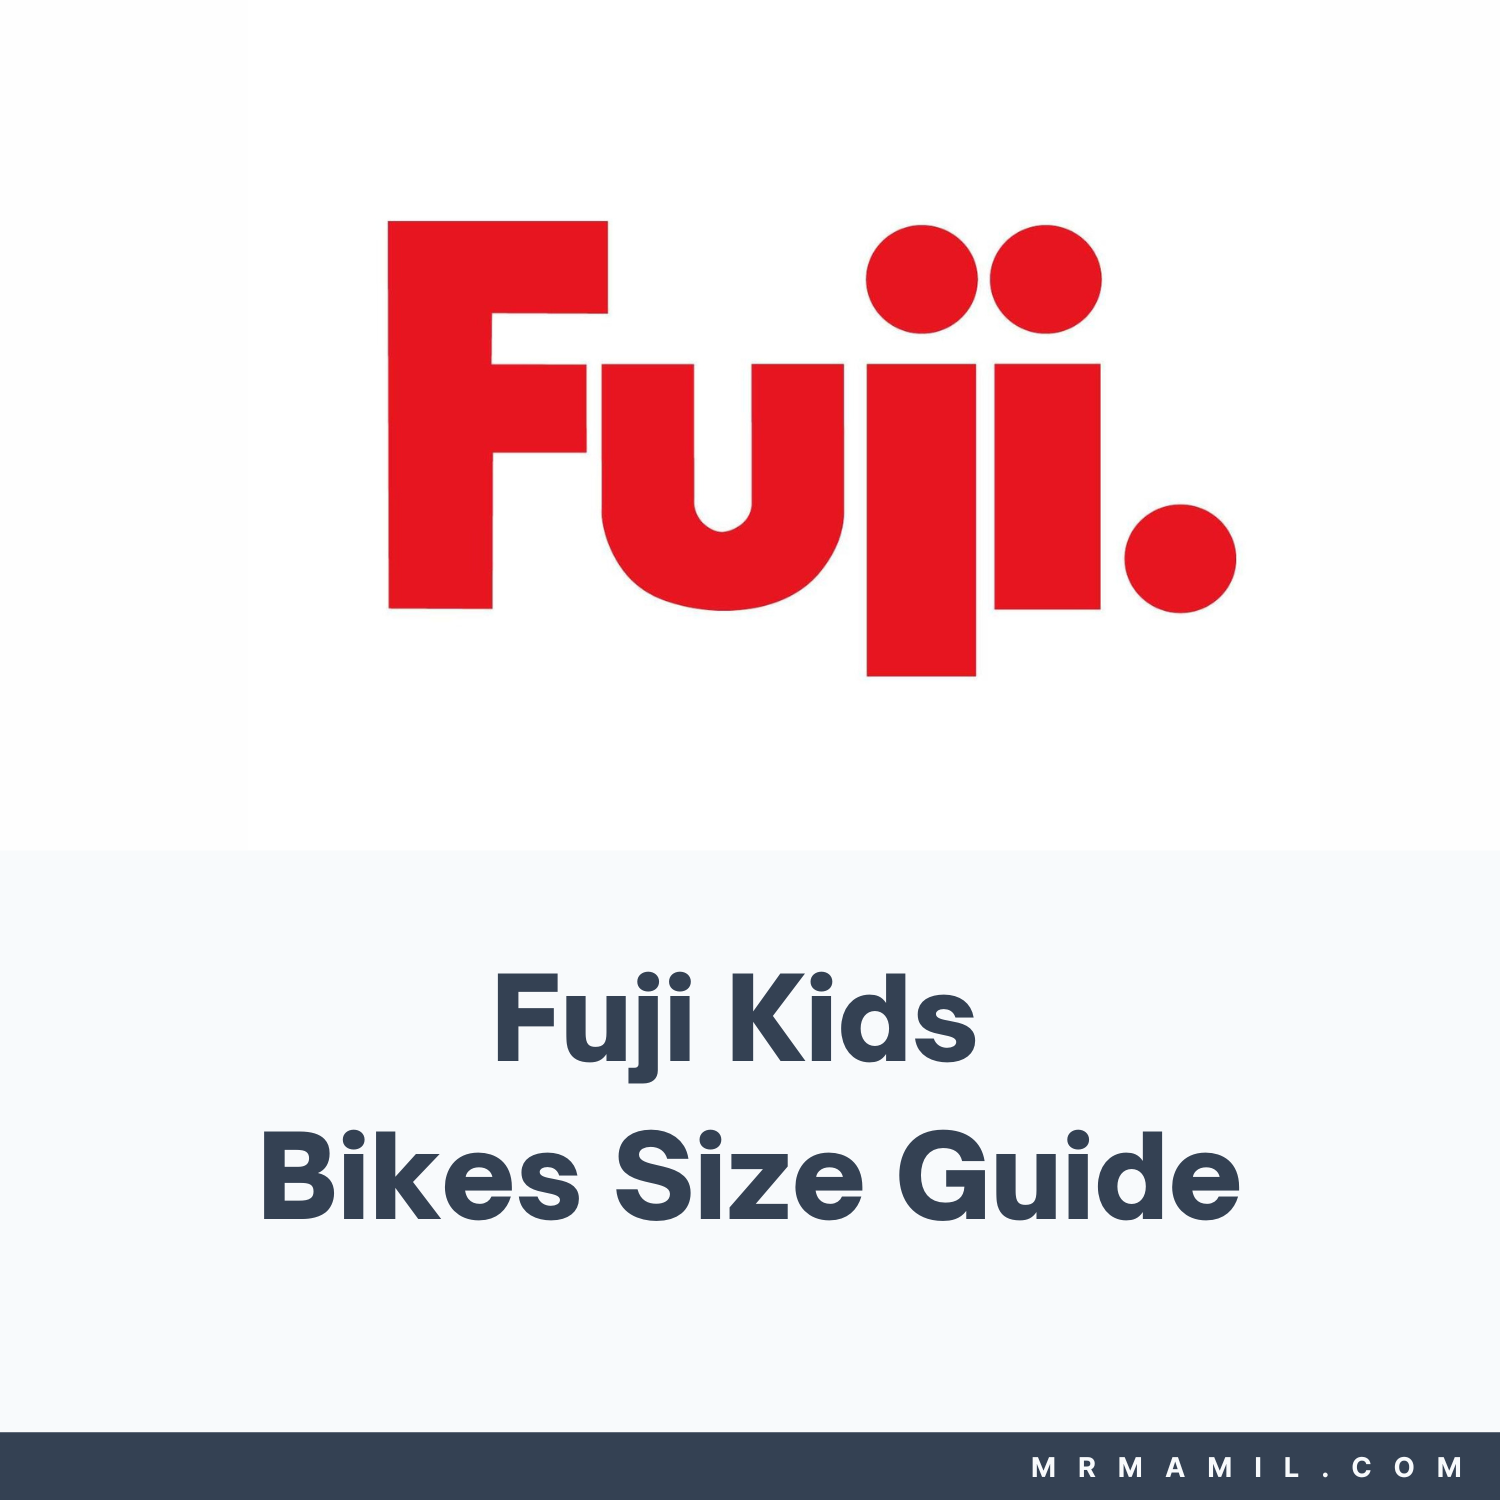 Fuji Kids Bikes Size Guide